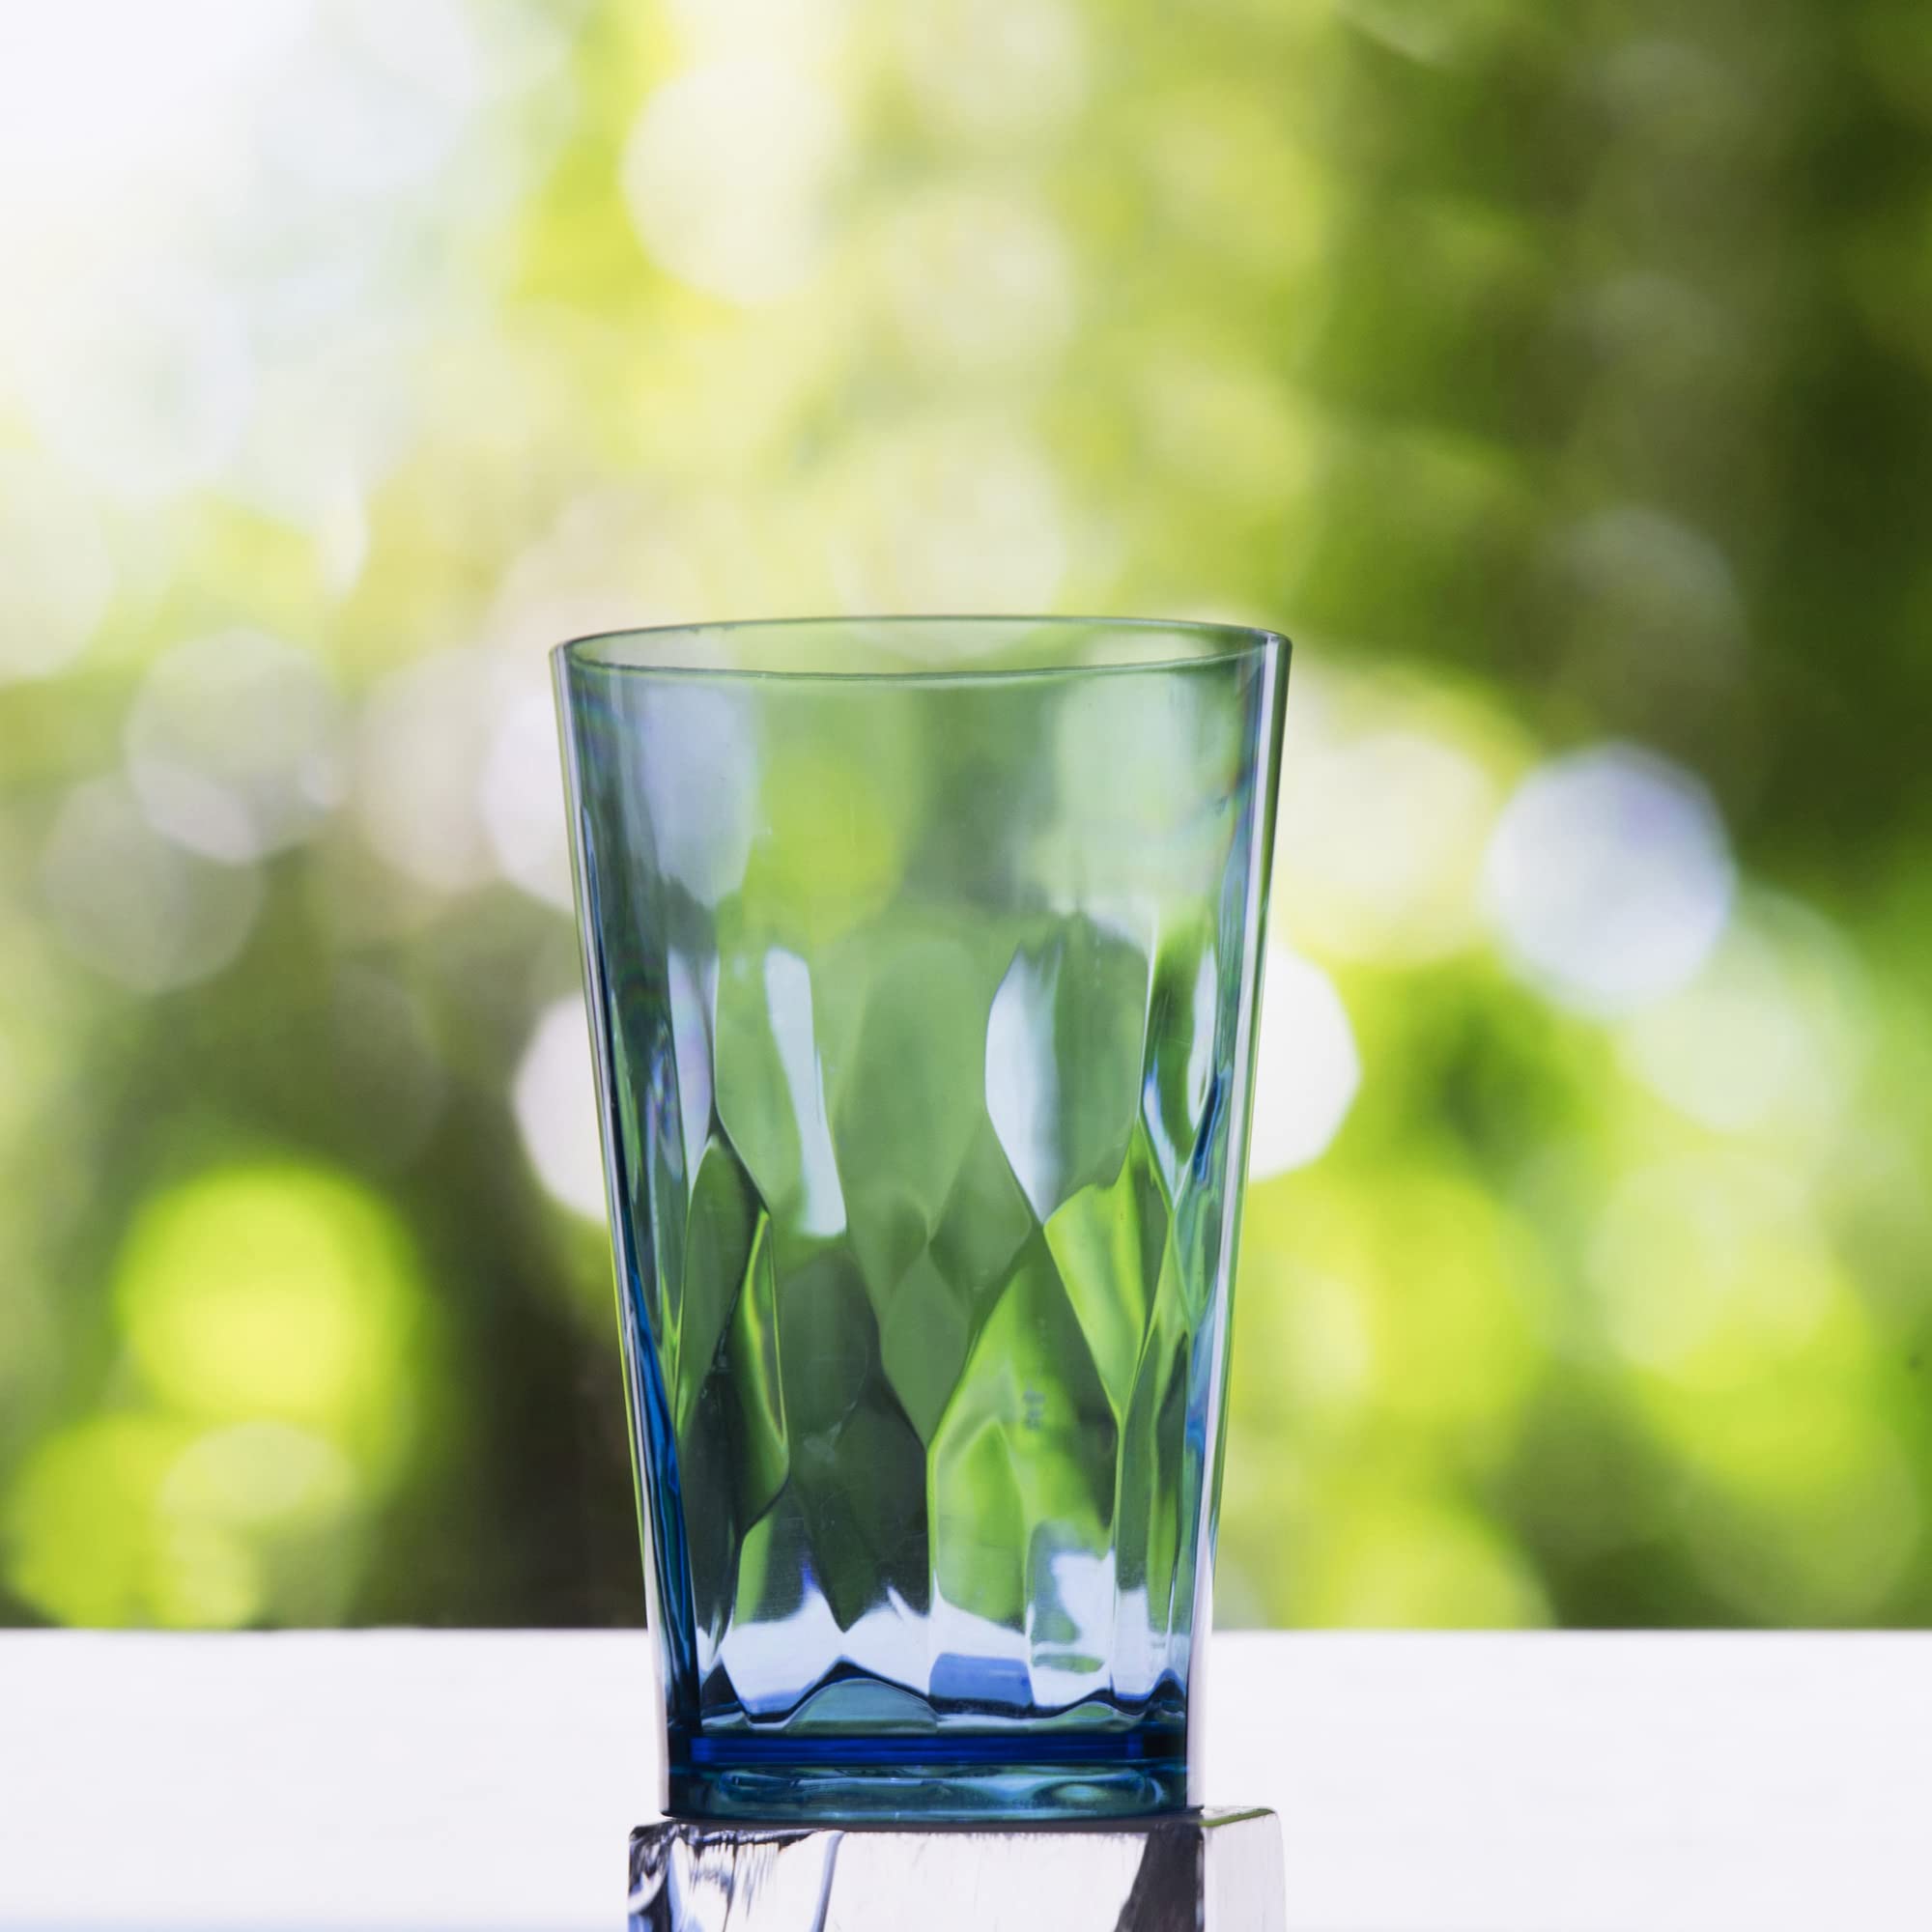 JGIRL unbreakable Plastic Drinking Glasses [Set of 6] Shatterproof Drinking  Cups, reusable Drinking Tumblers, Plastic glass